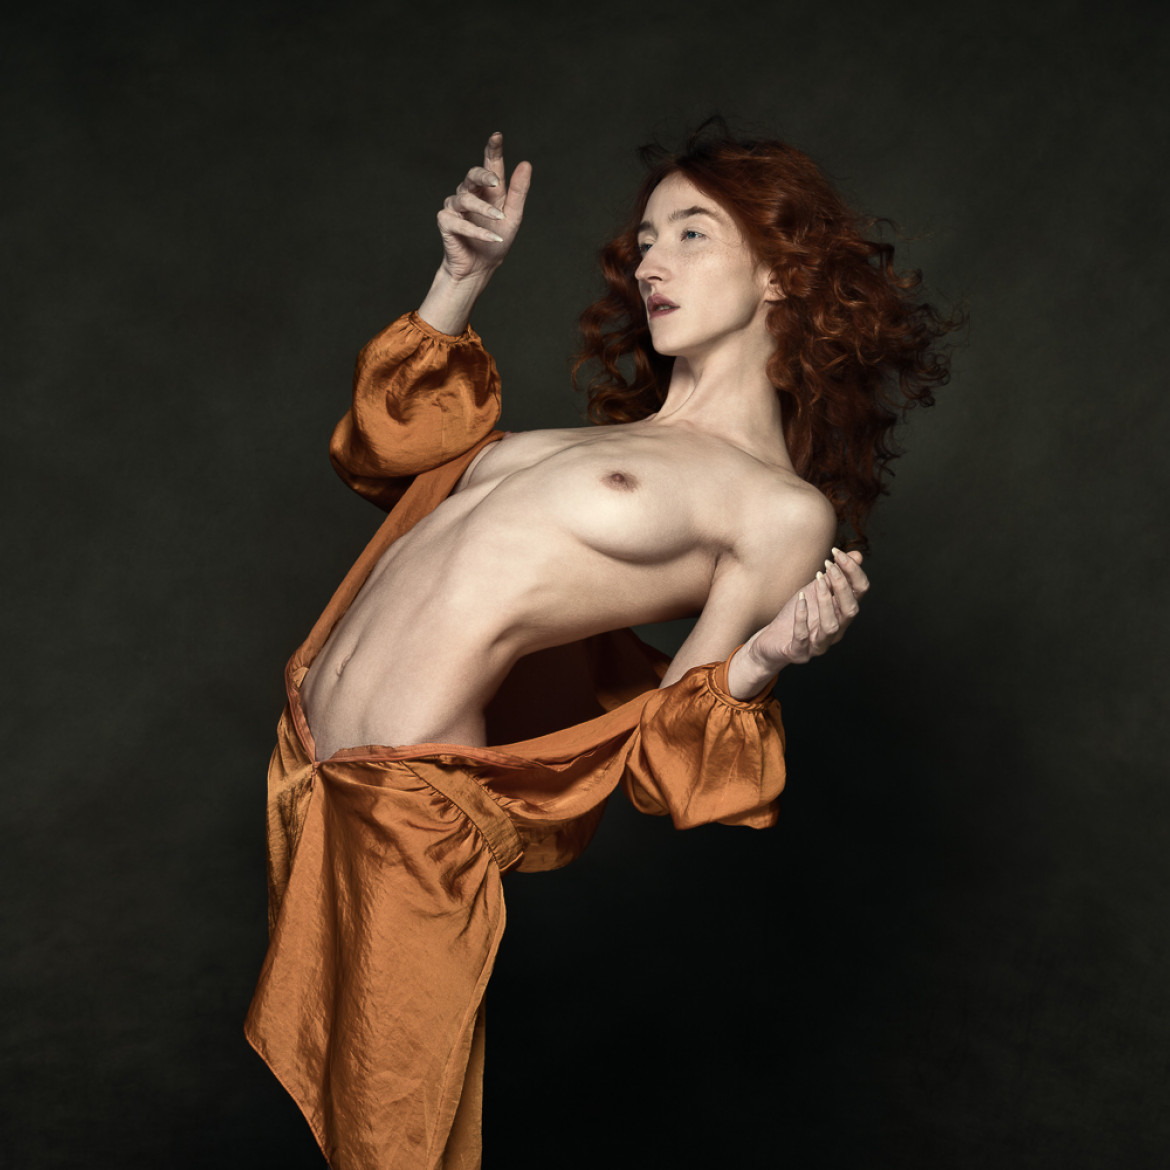 Titus Popławski - I miejsce, Nudes (kategoria amatorska) Fine Art Photography Awards 2018